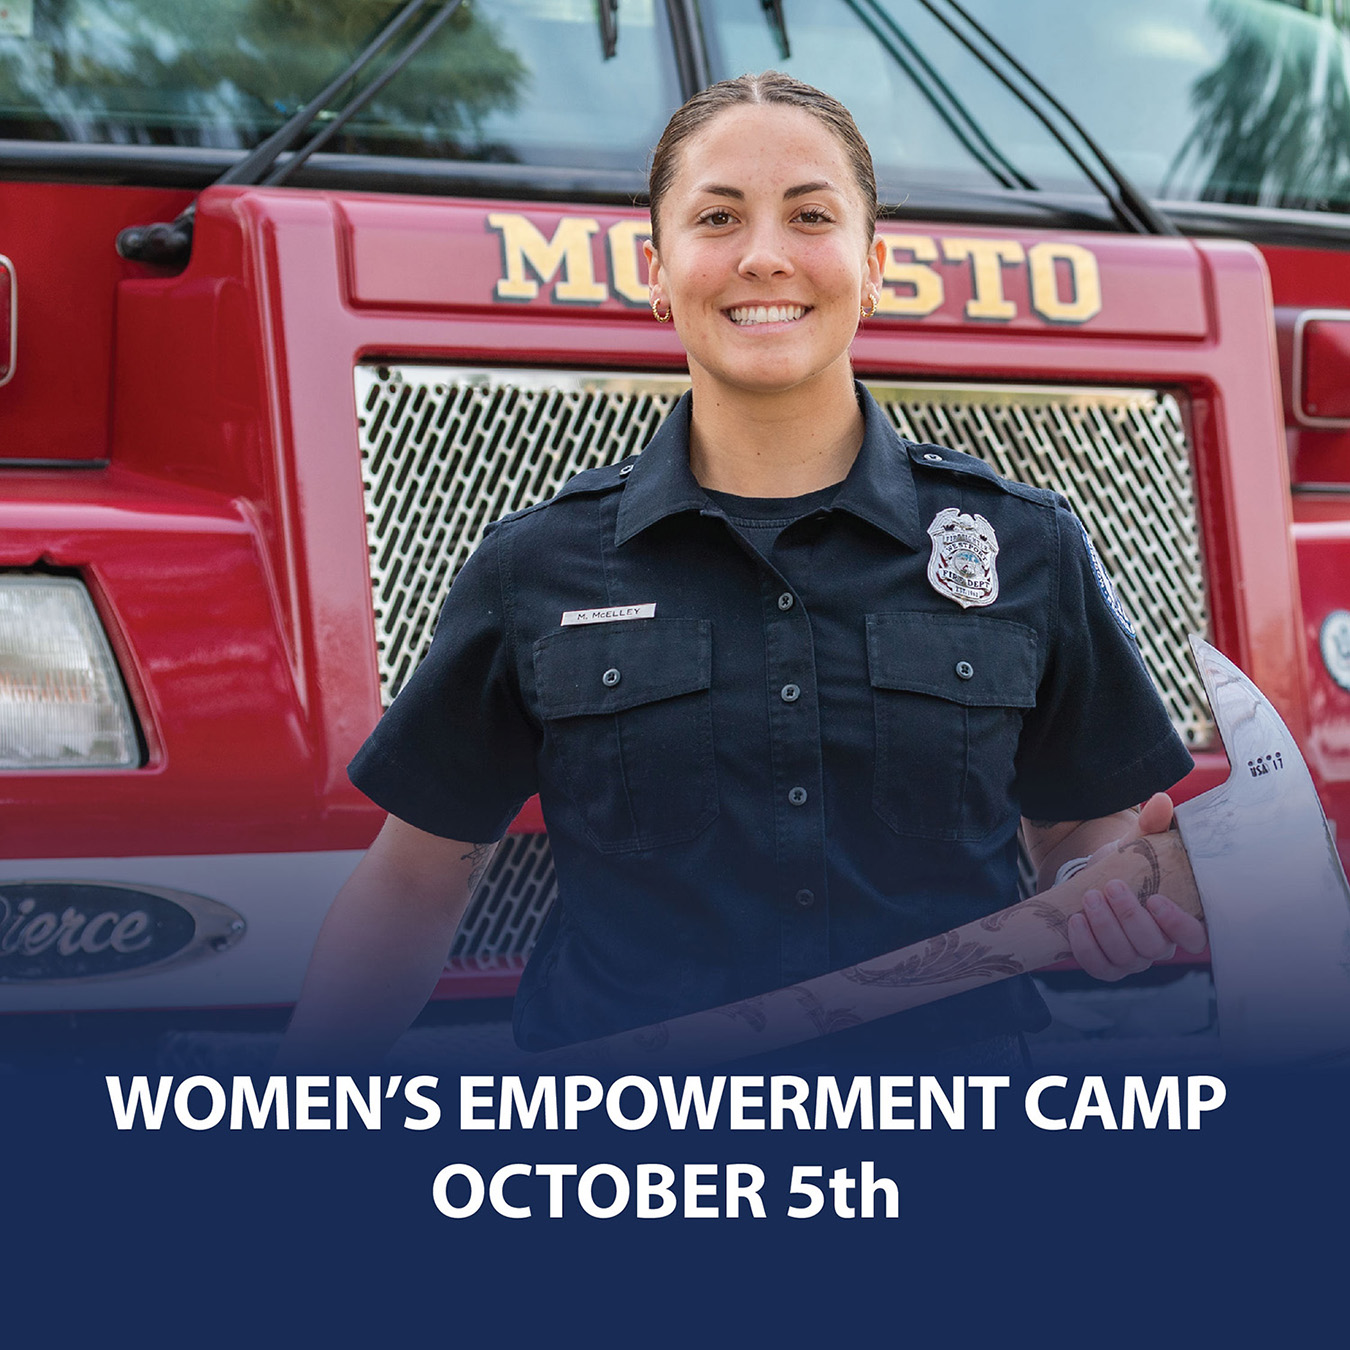 MJC Regional Fire Training Center to host the Women's Empowerment Camp